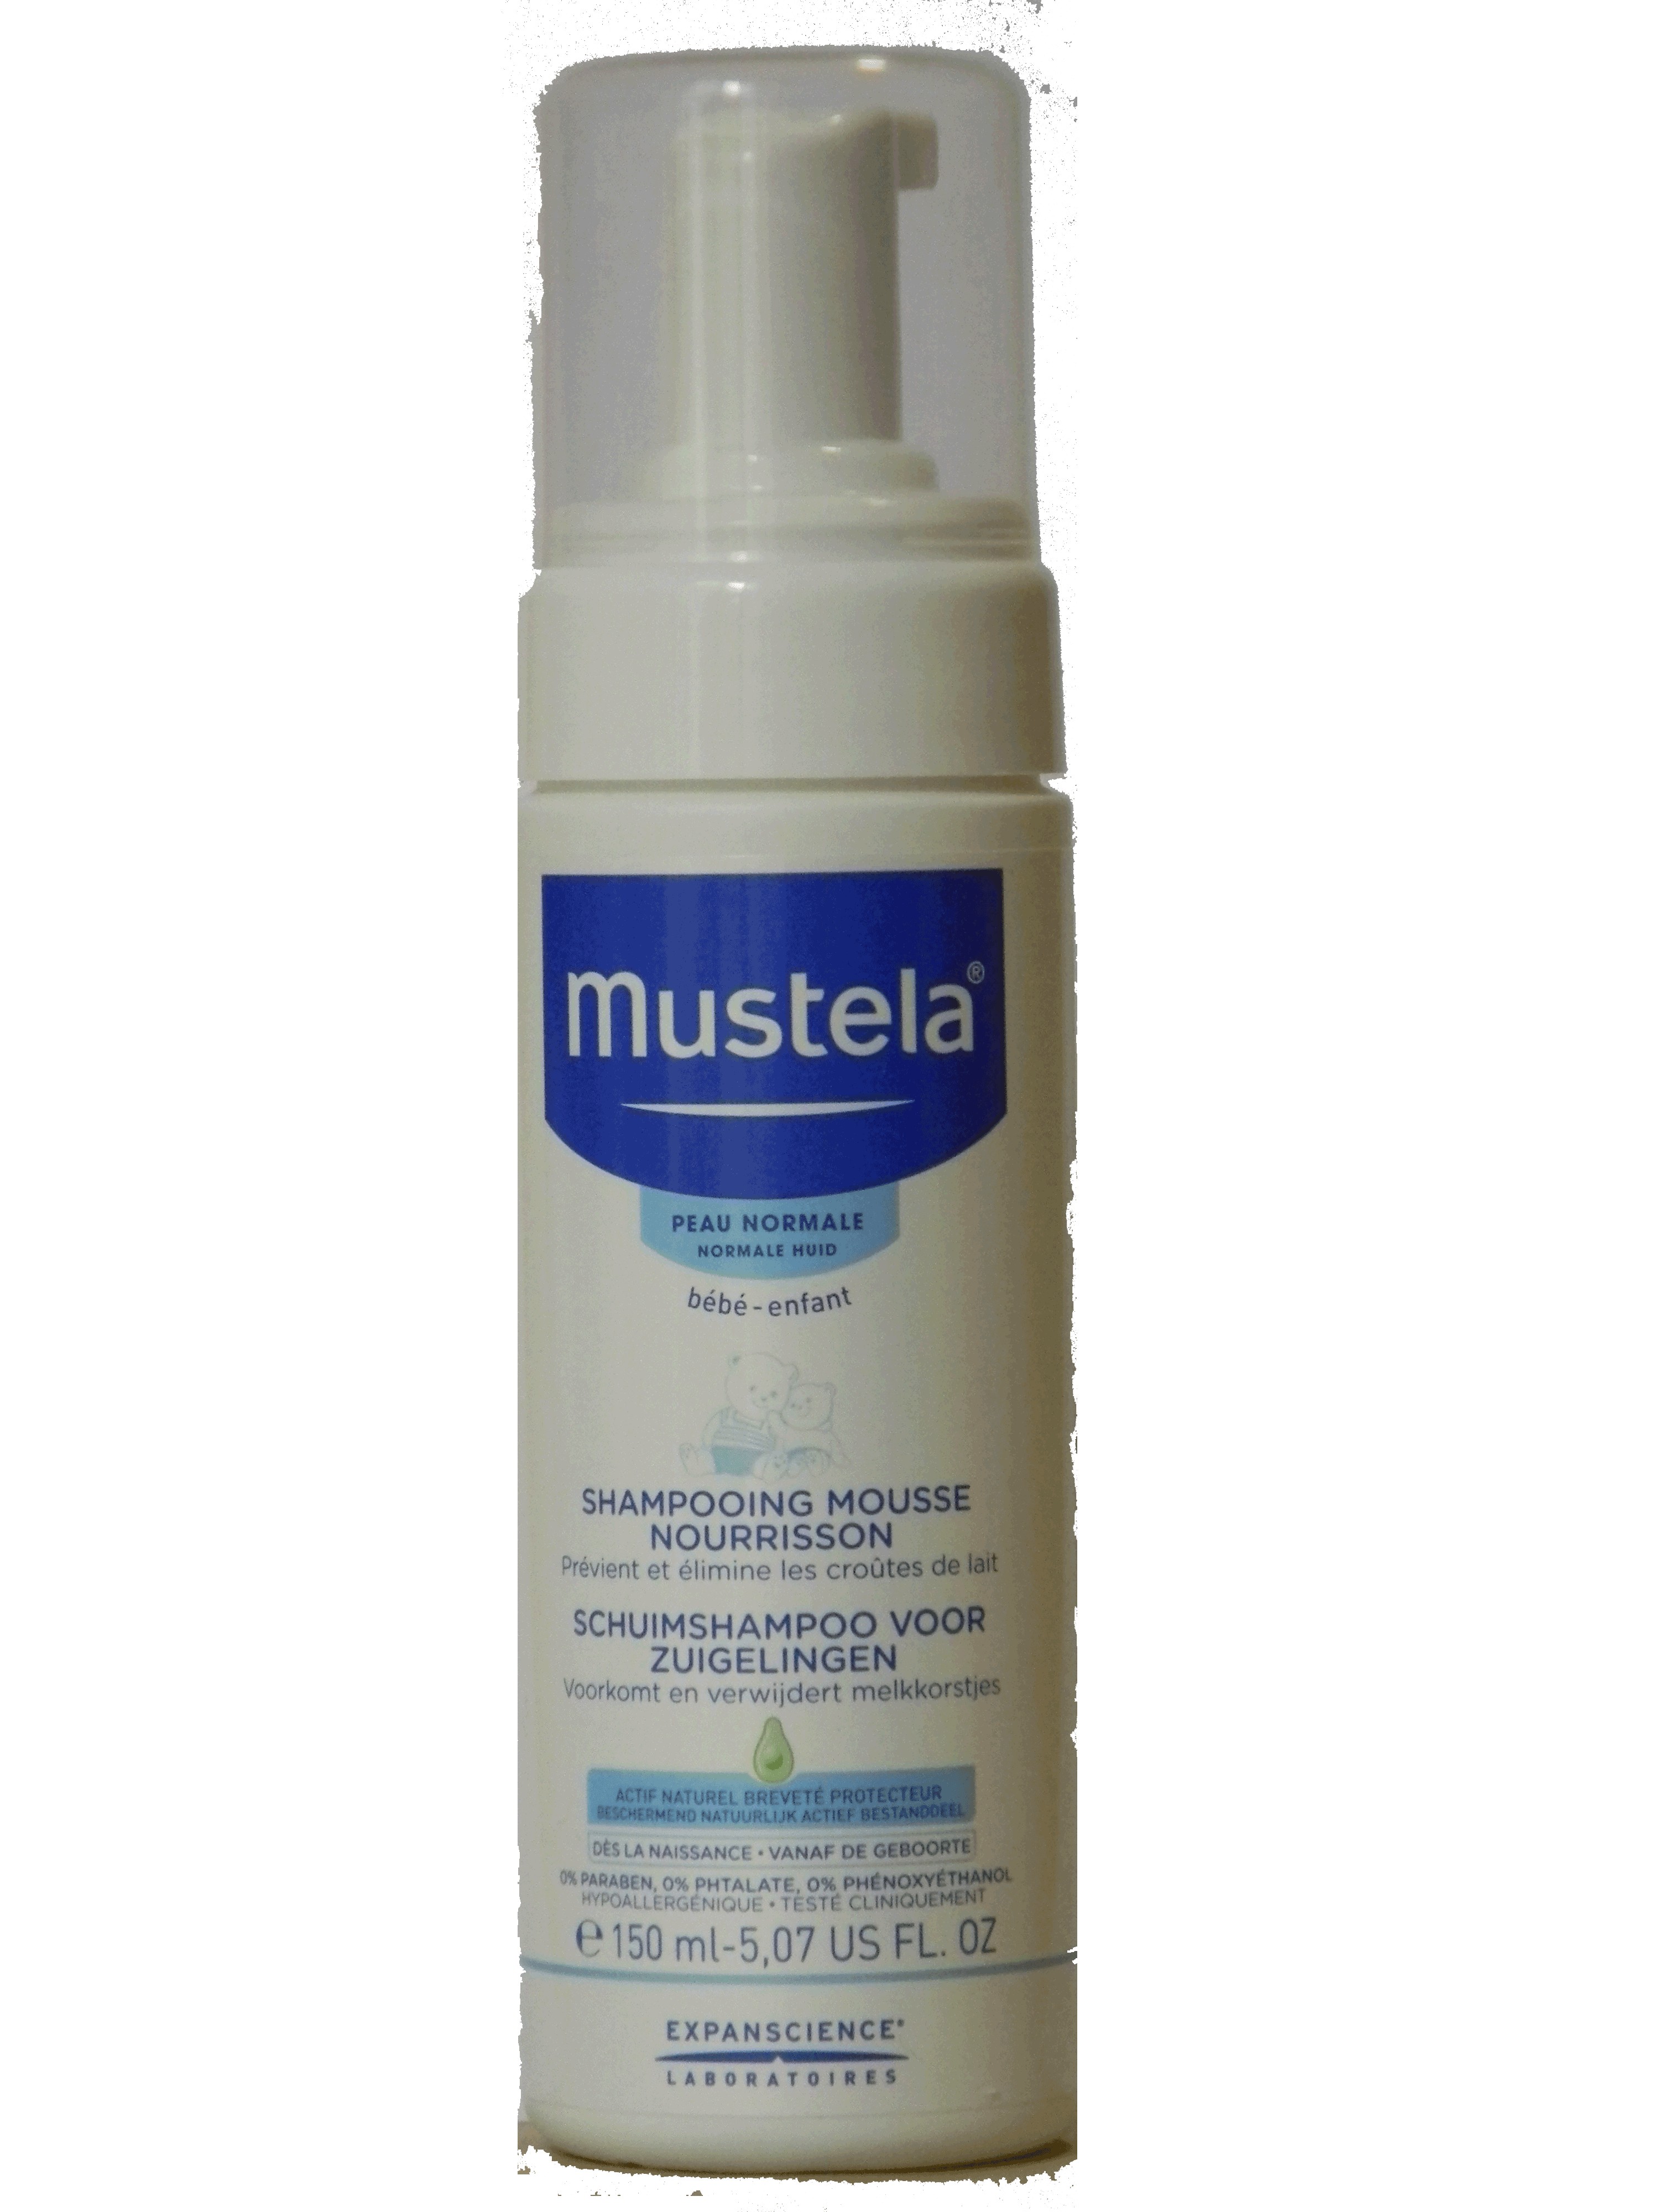 Mustela Mousse Shampoo per Crosta Lattea Pelle Normale150 ml. - TuttoFarma